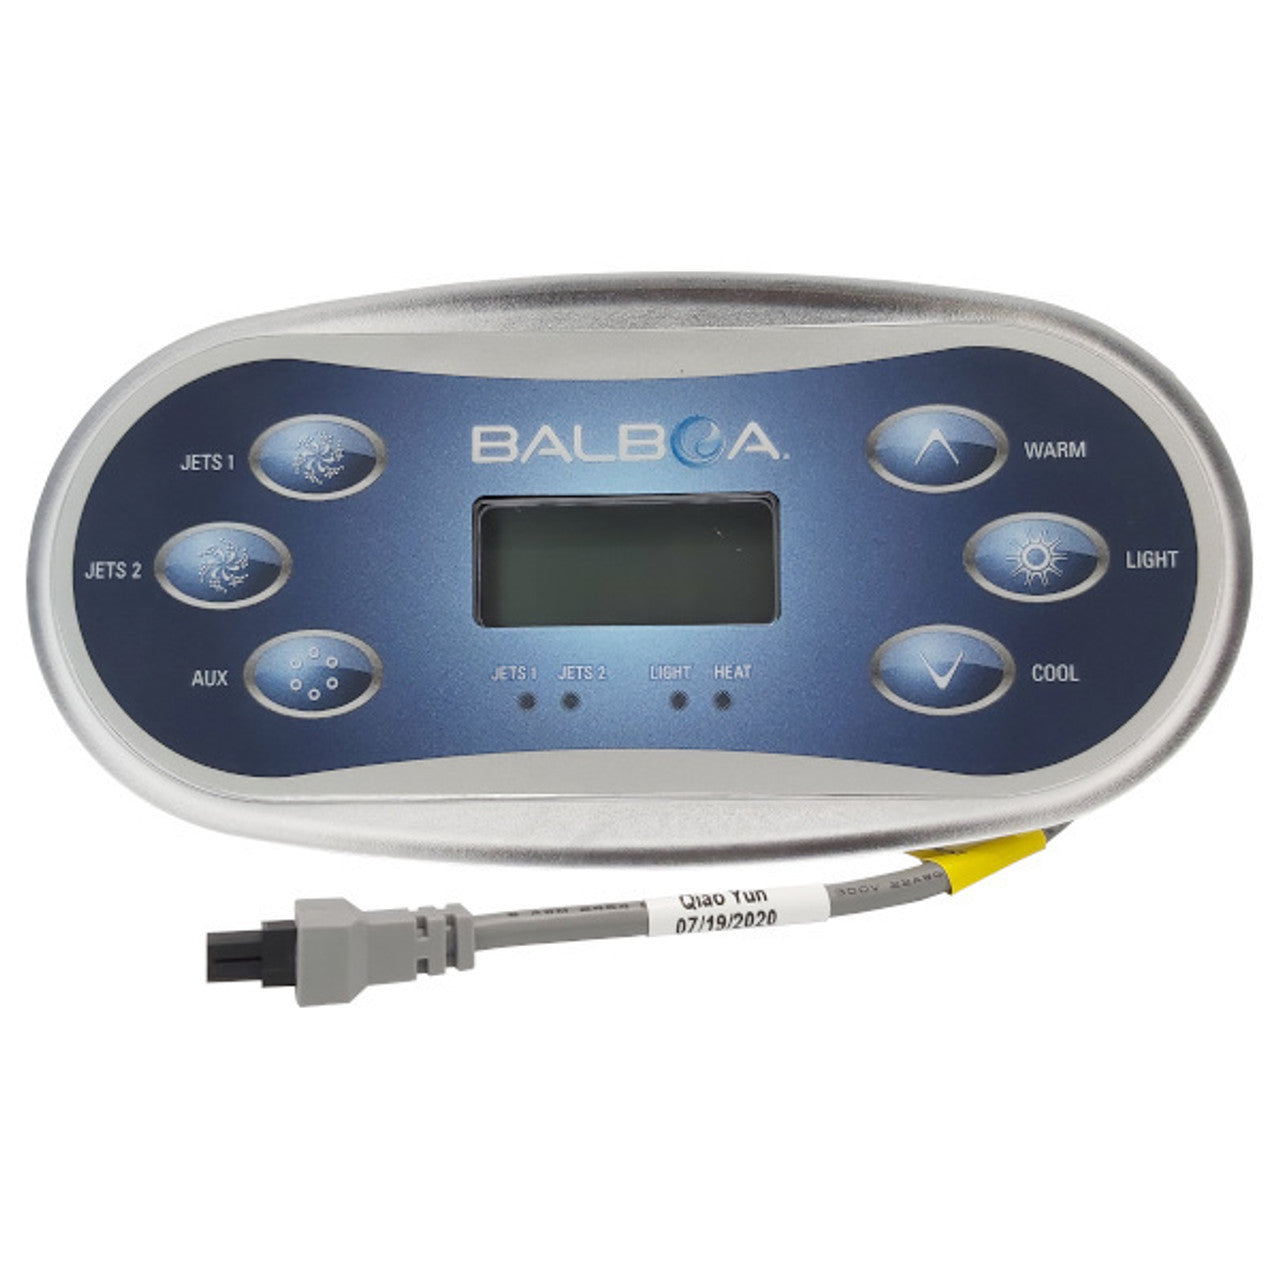 Balboa TP600 control display